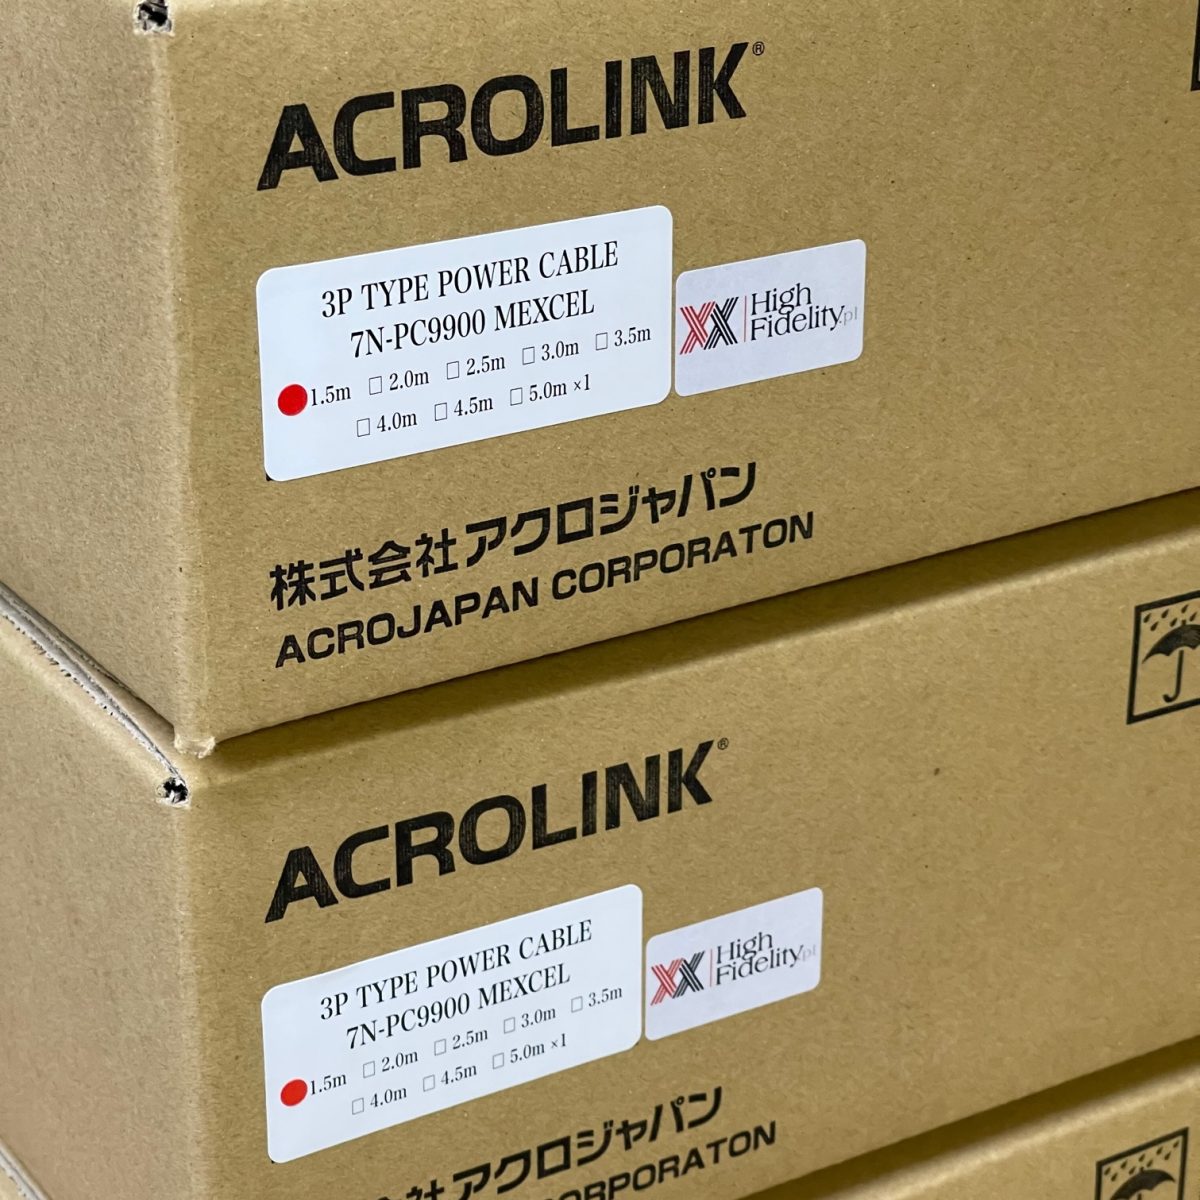 Acrolink 7N-PC9900 MEXCEL HF20 Edizione. Kabel na 20-lecie „High Fidelity”